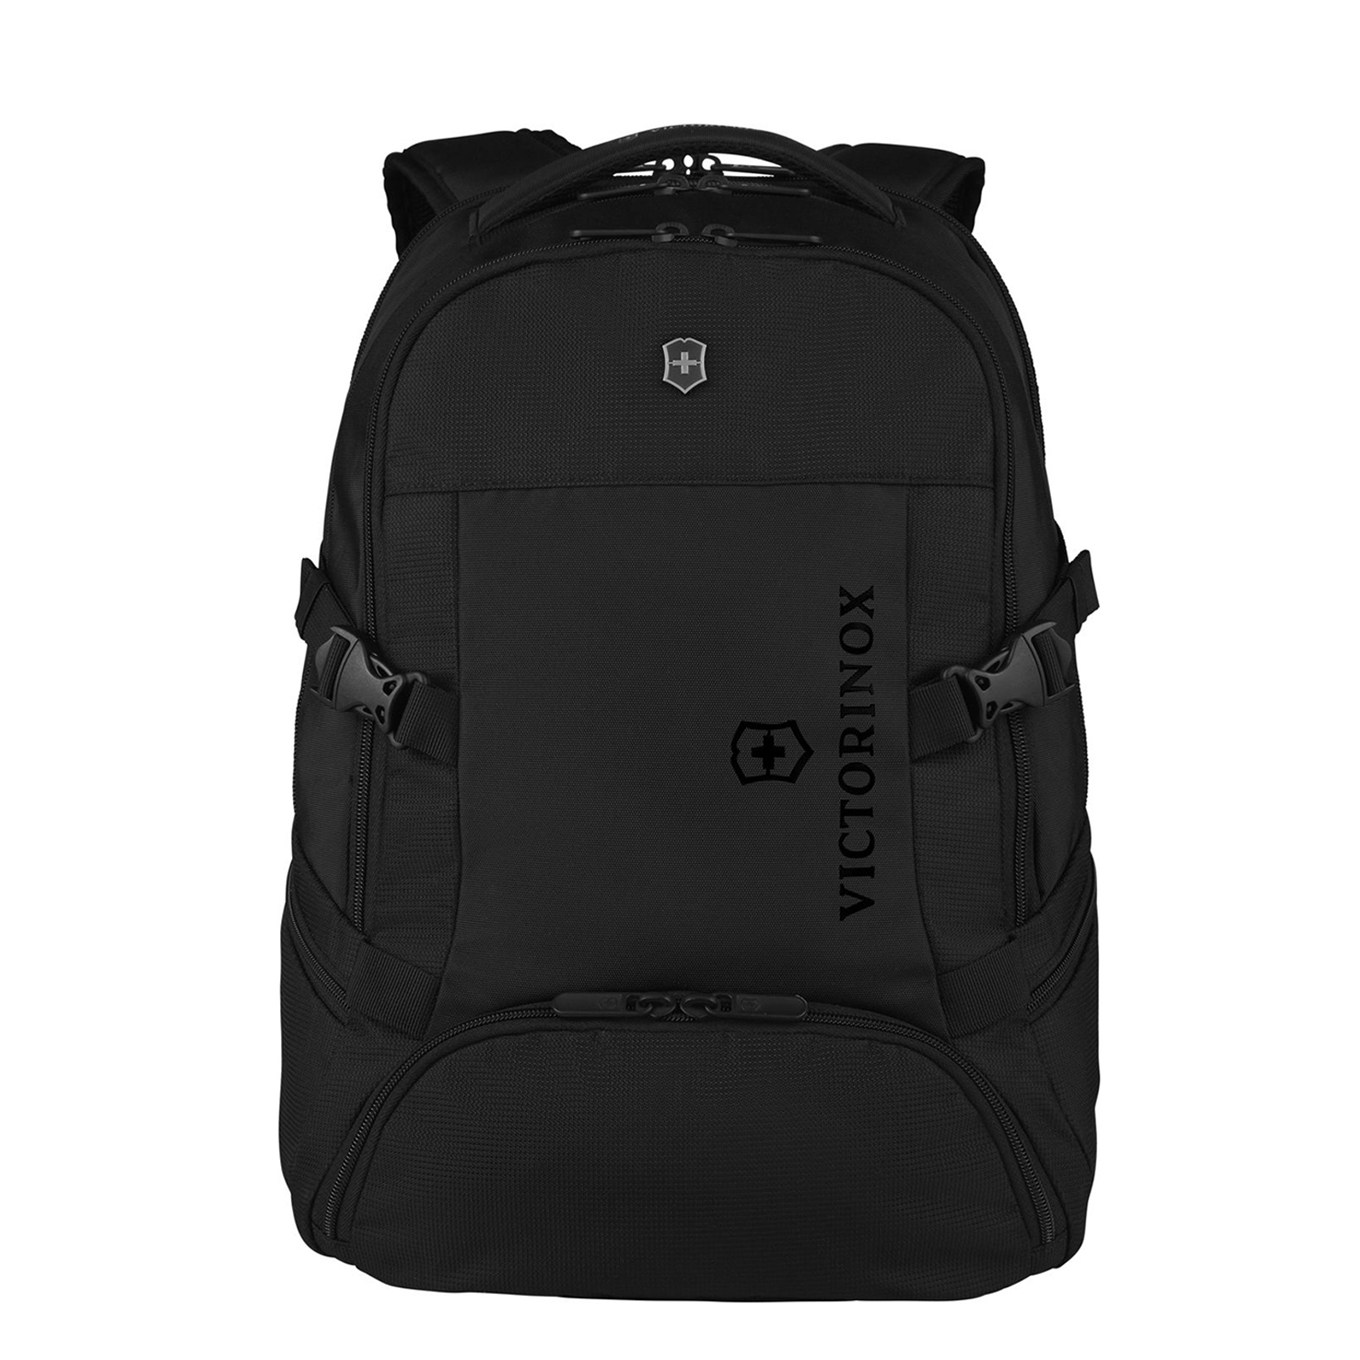 Victorinox VX Sport Evo Deluxe Backpack black/black backpack